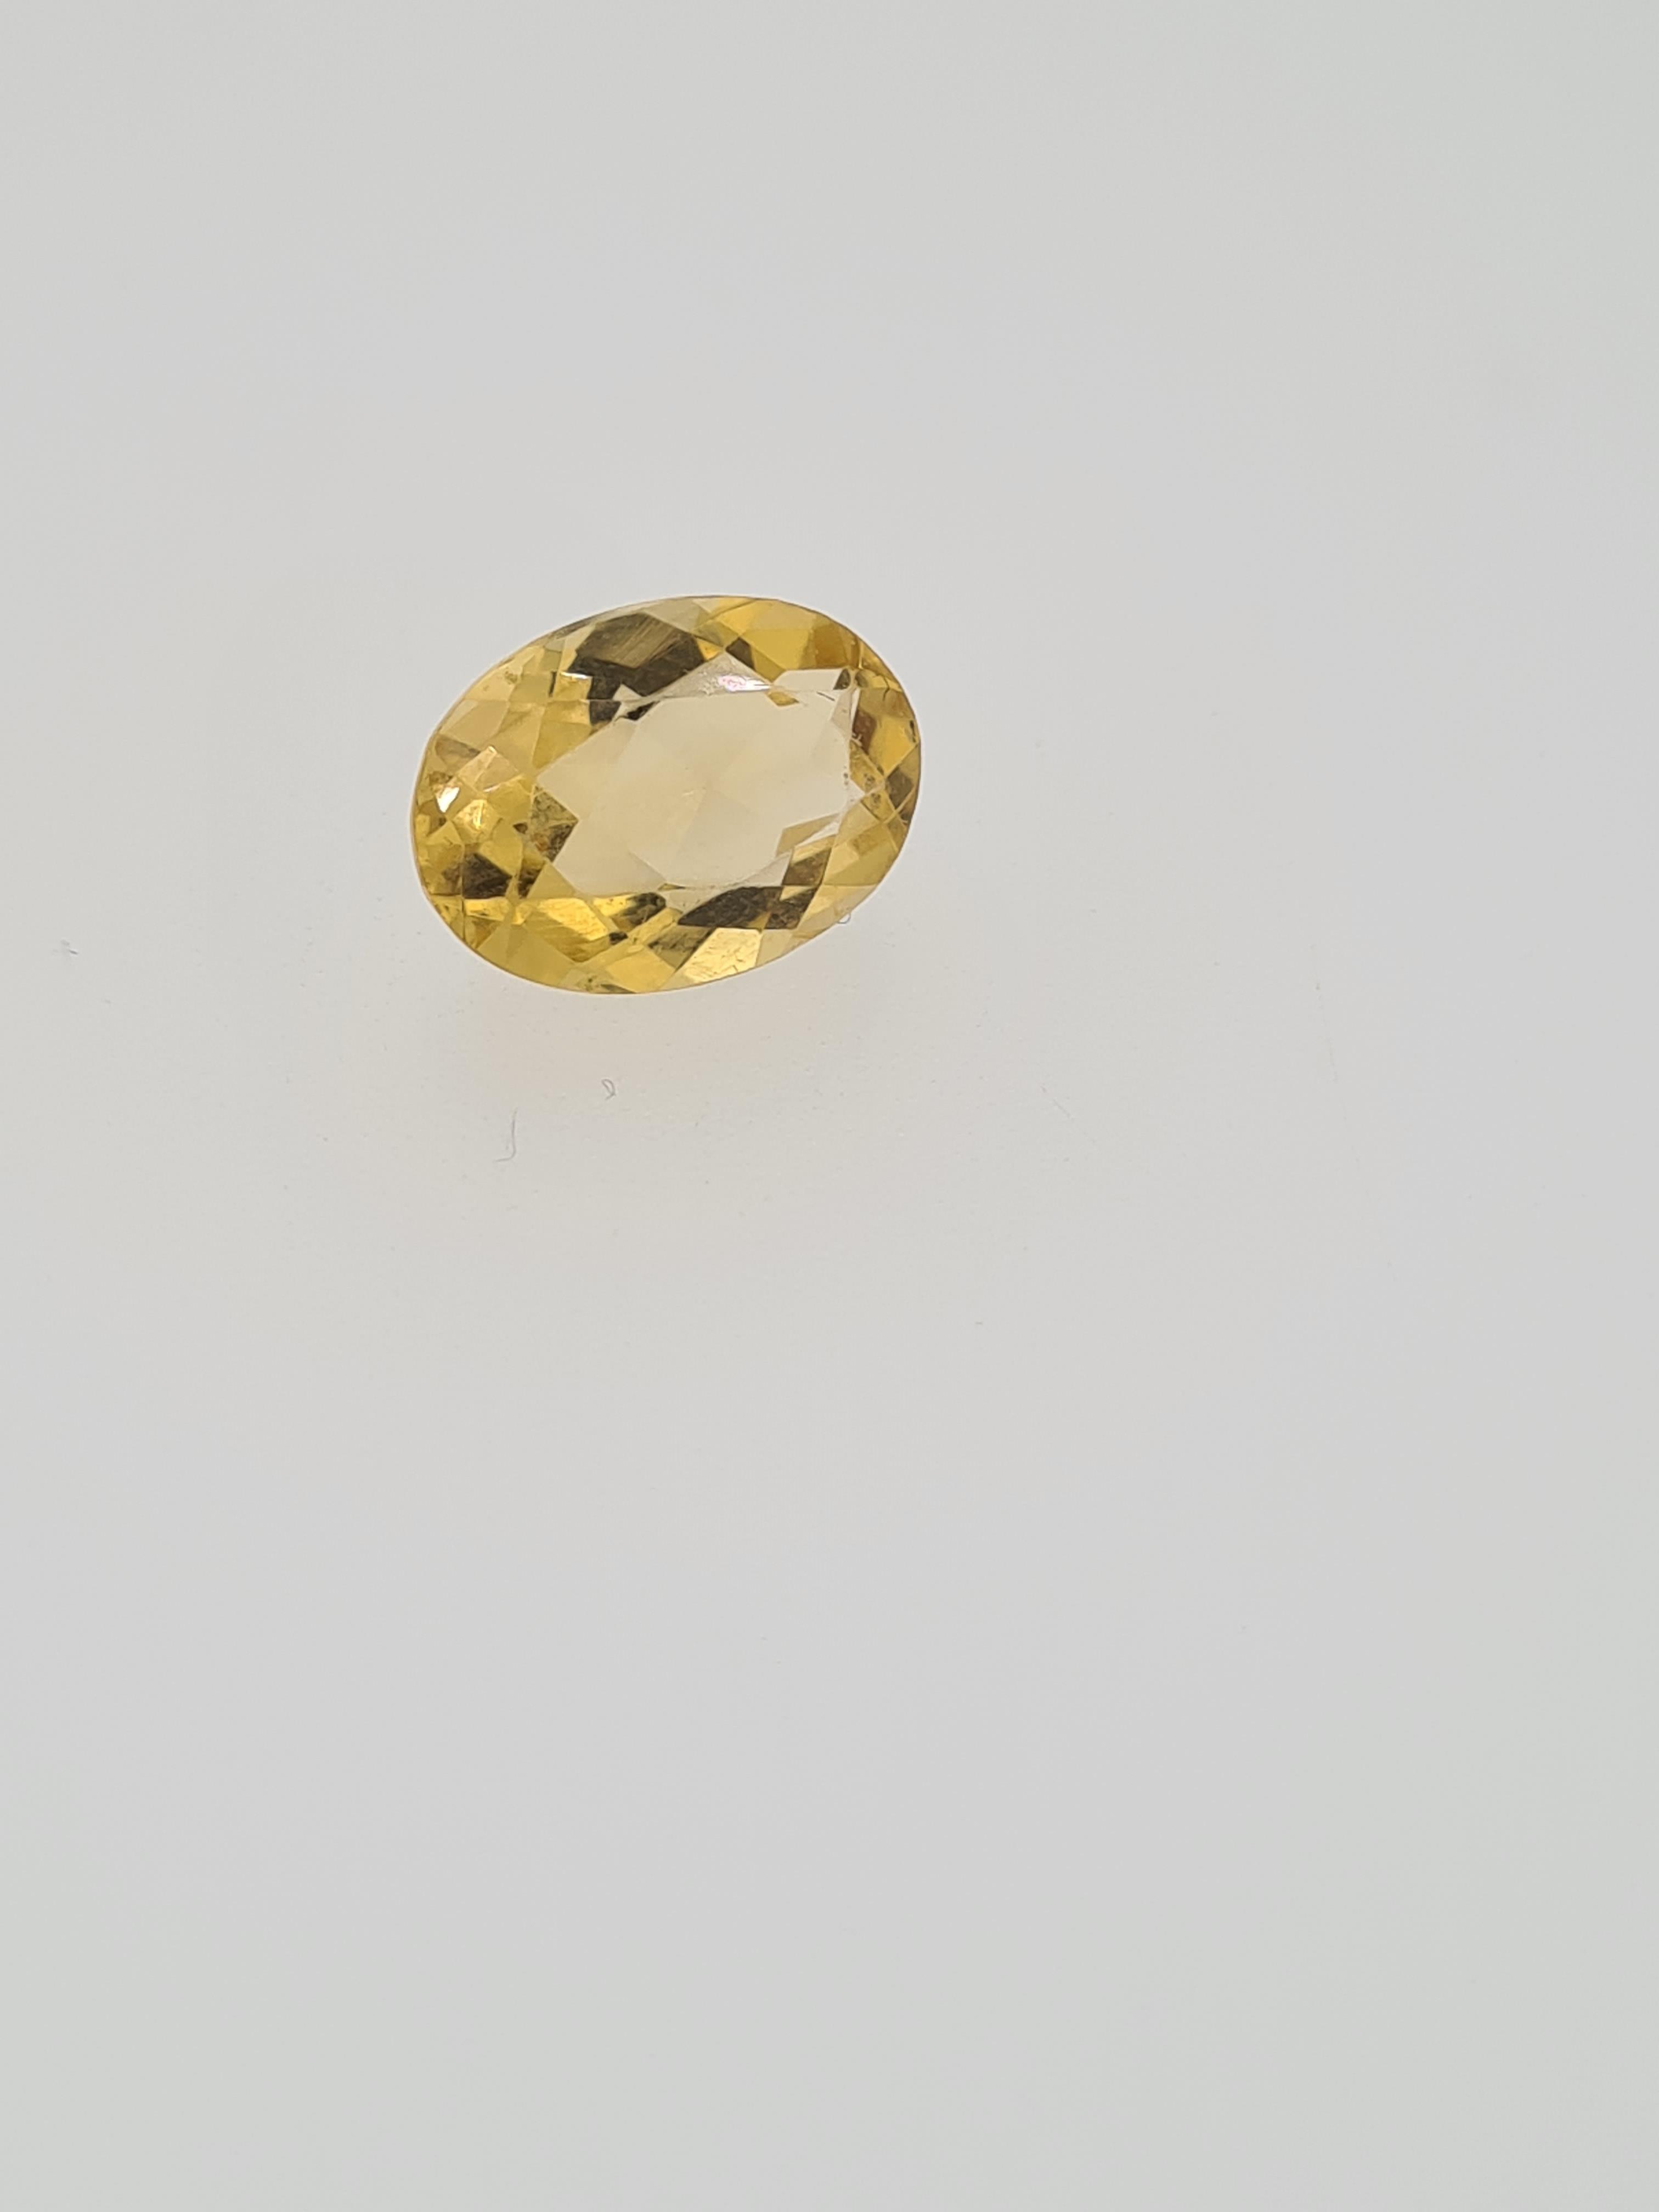 Citrine oval gemstone - Image 4 of 4